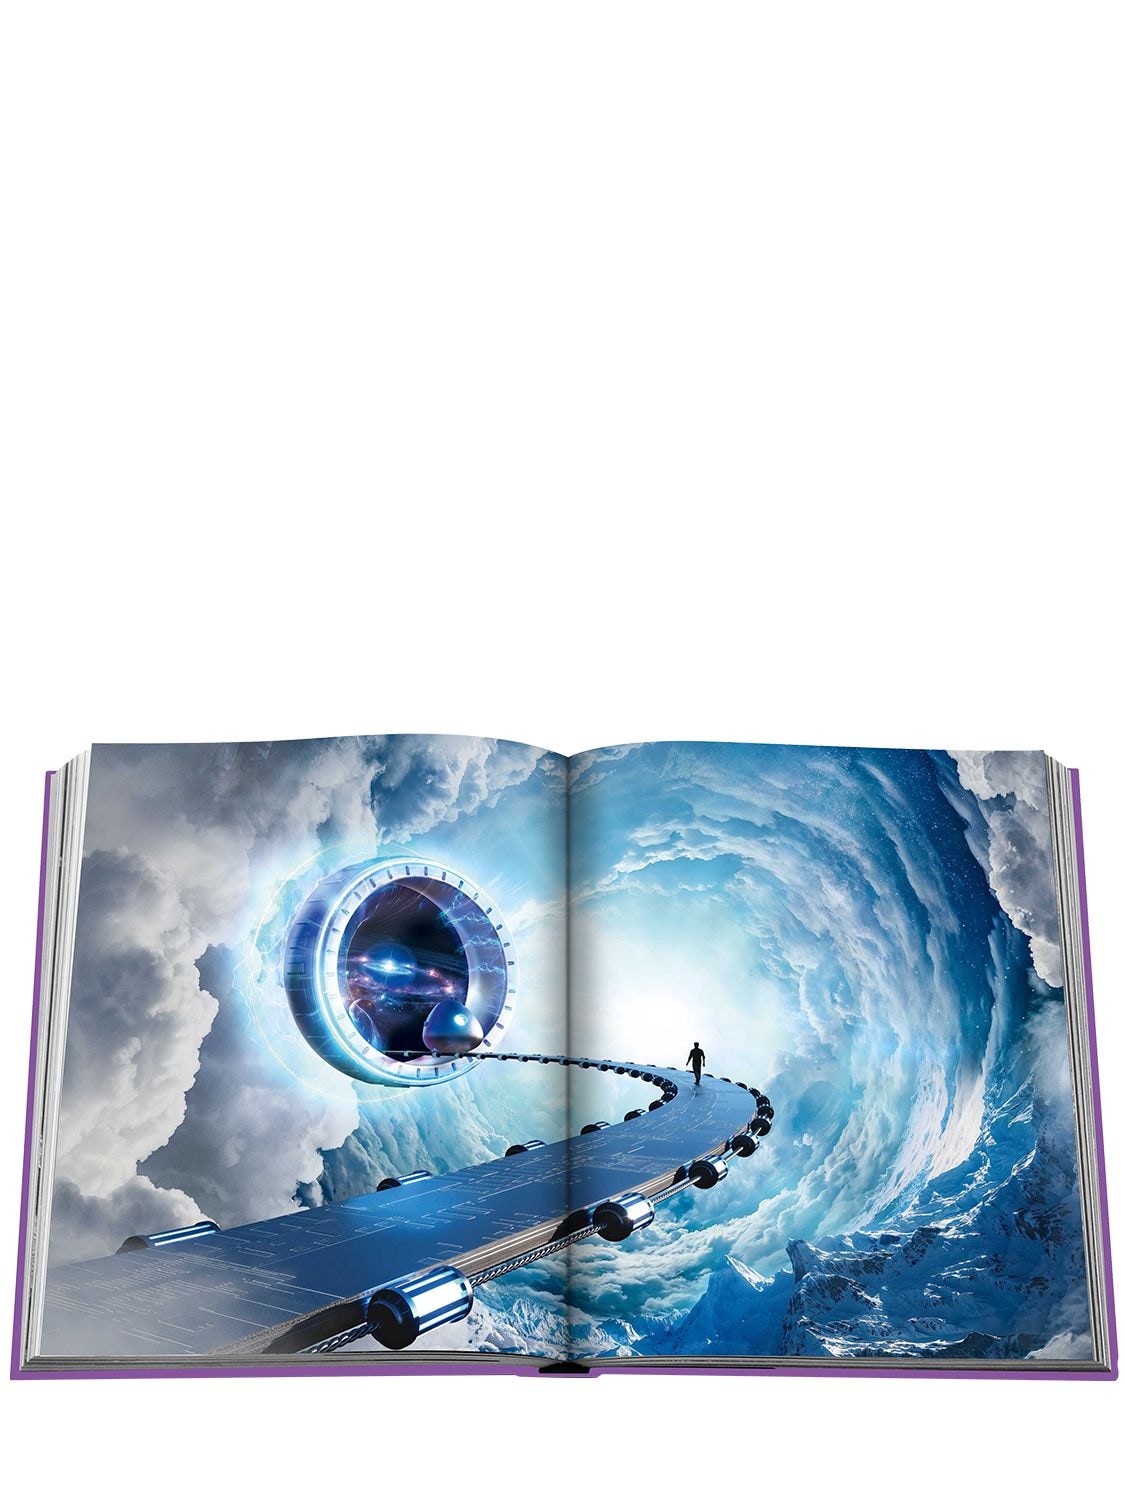 Shop Assouline Metaverse Dream Book In Multicolor